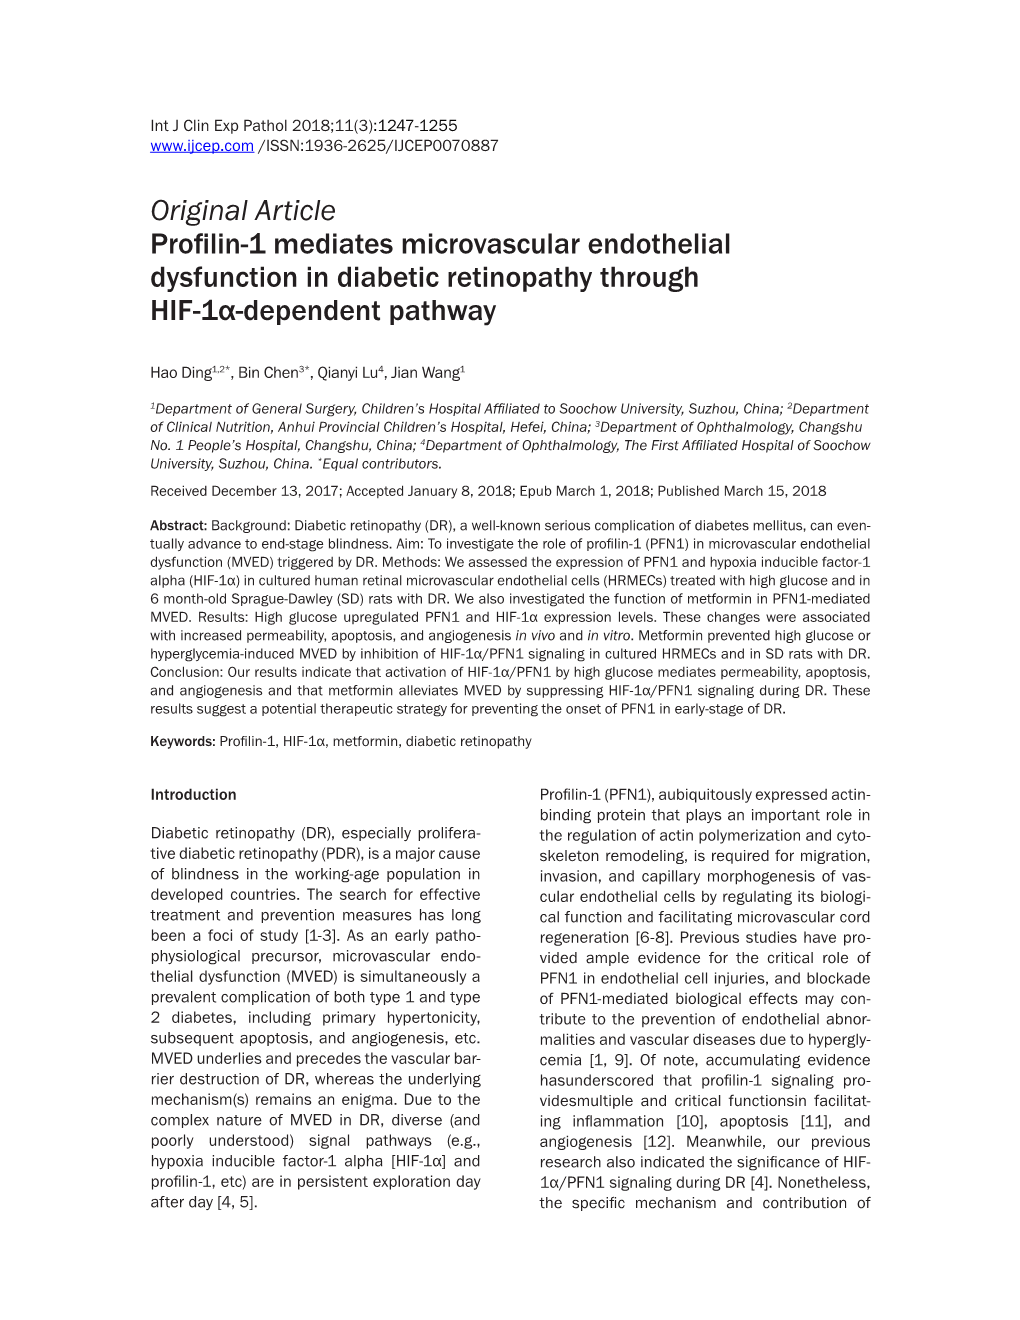 Original Article Profilin-1 Mediates Microvascular Endothelial Dysfunction in Diabetic Retinopathy Through HIF-1Α-Dependent Pathway